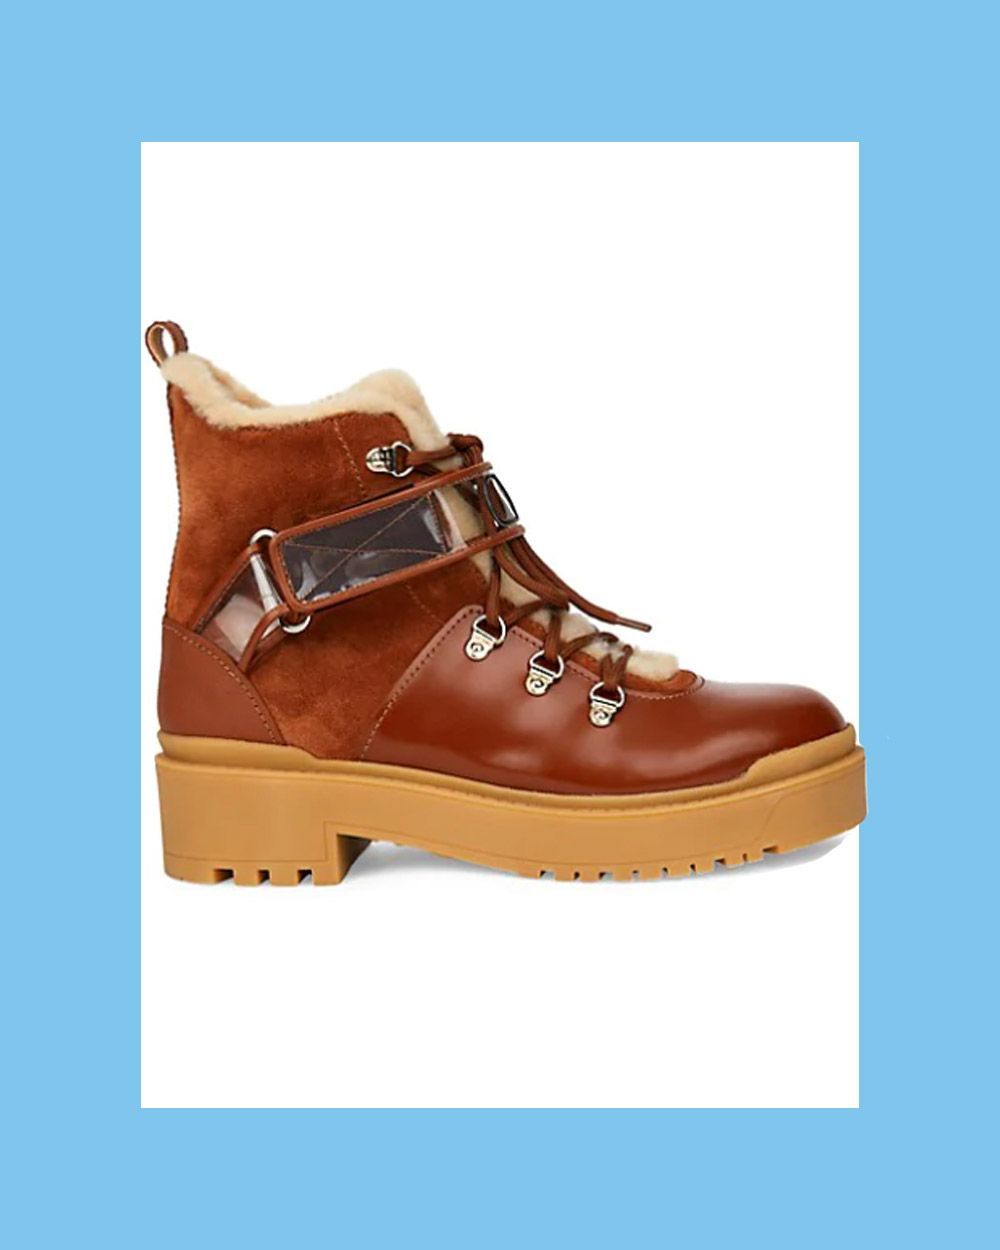 Valentino Garavani Trekkgirl Shearling-Lined Leather & Suede Hiking Boots